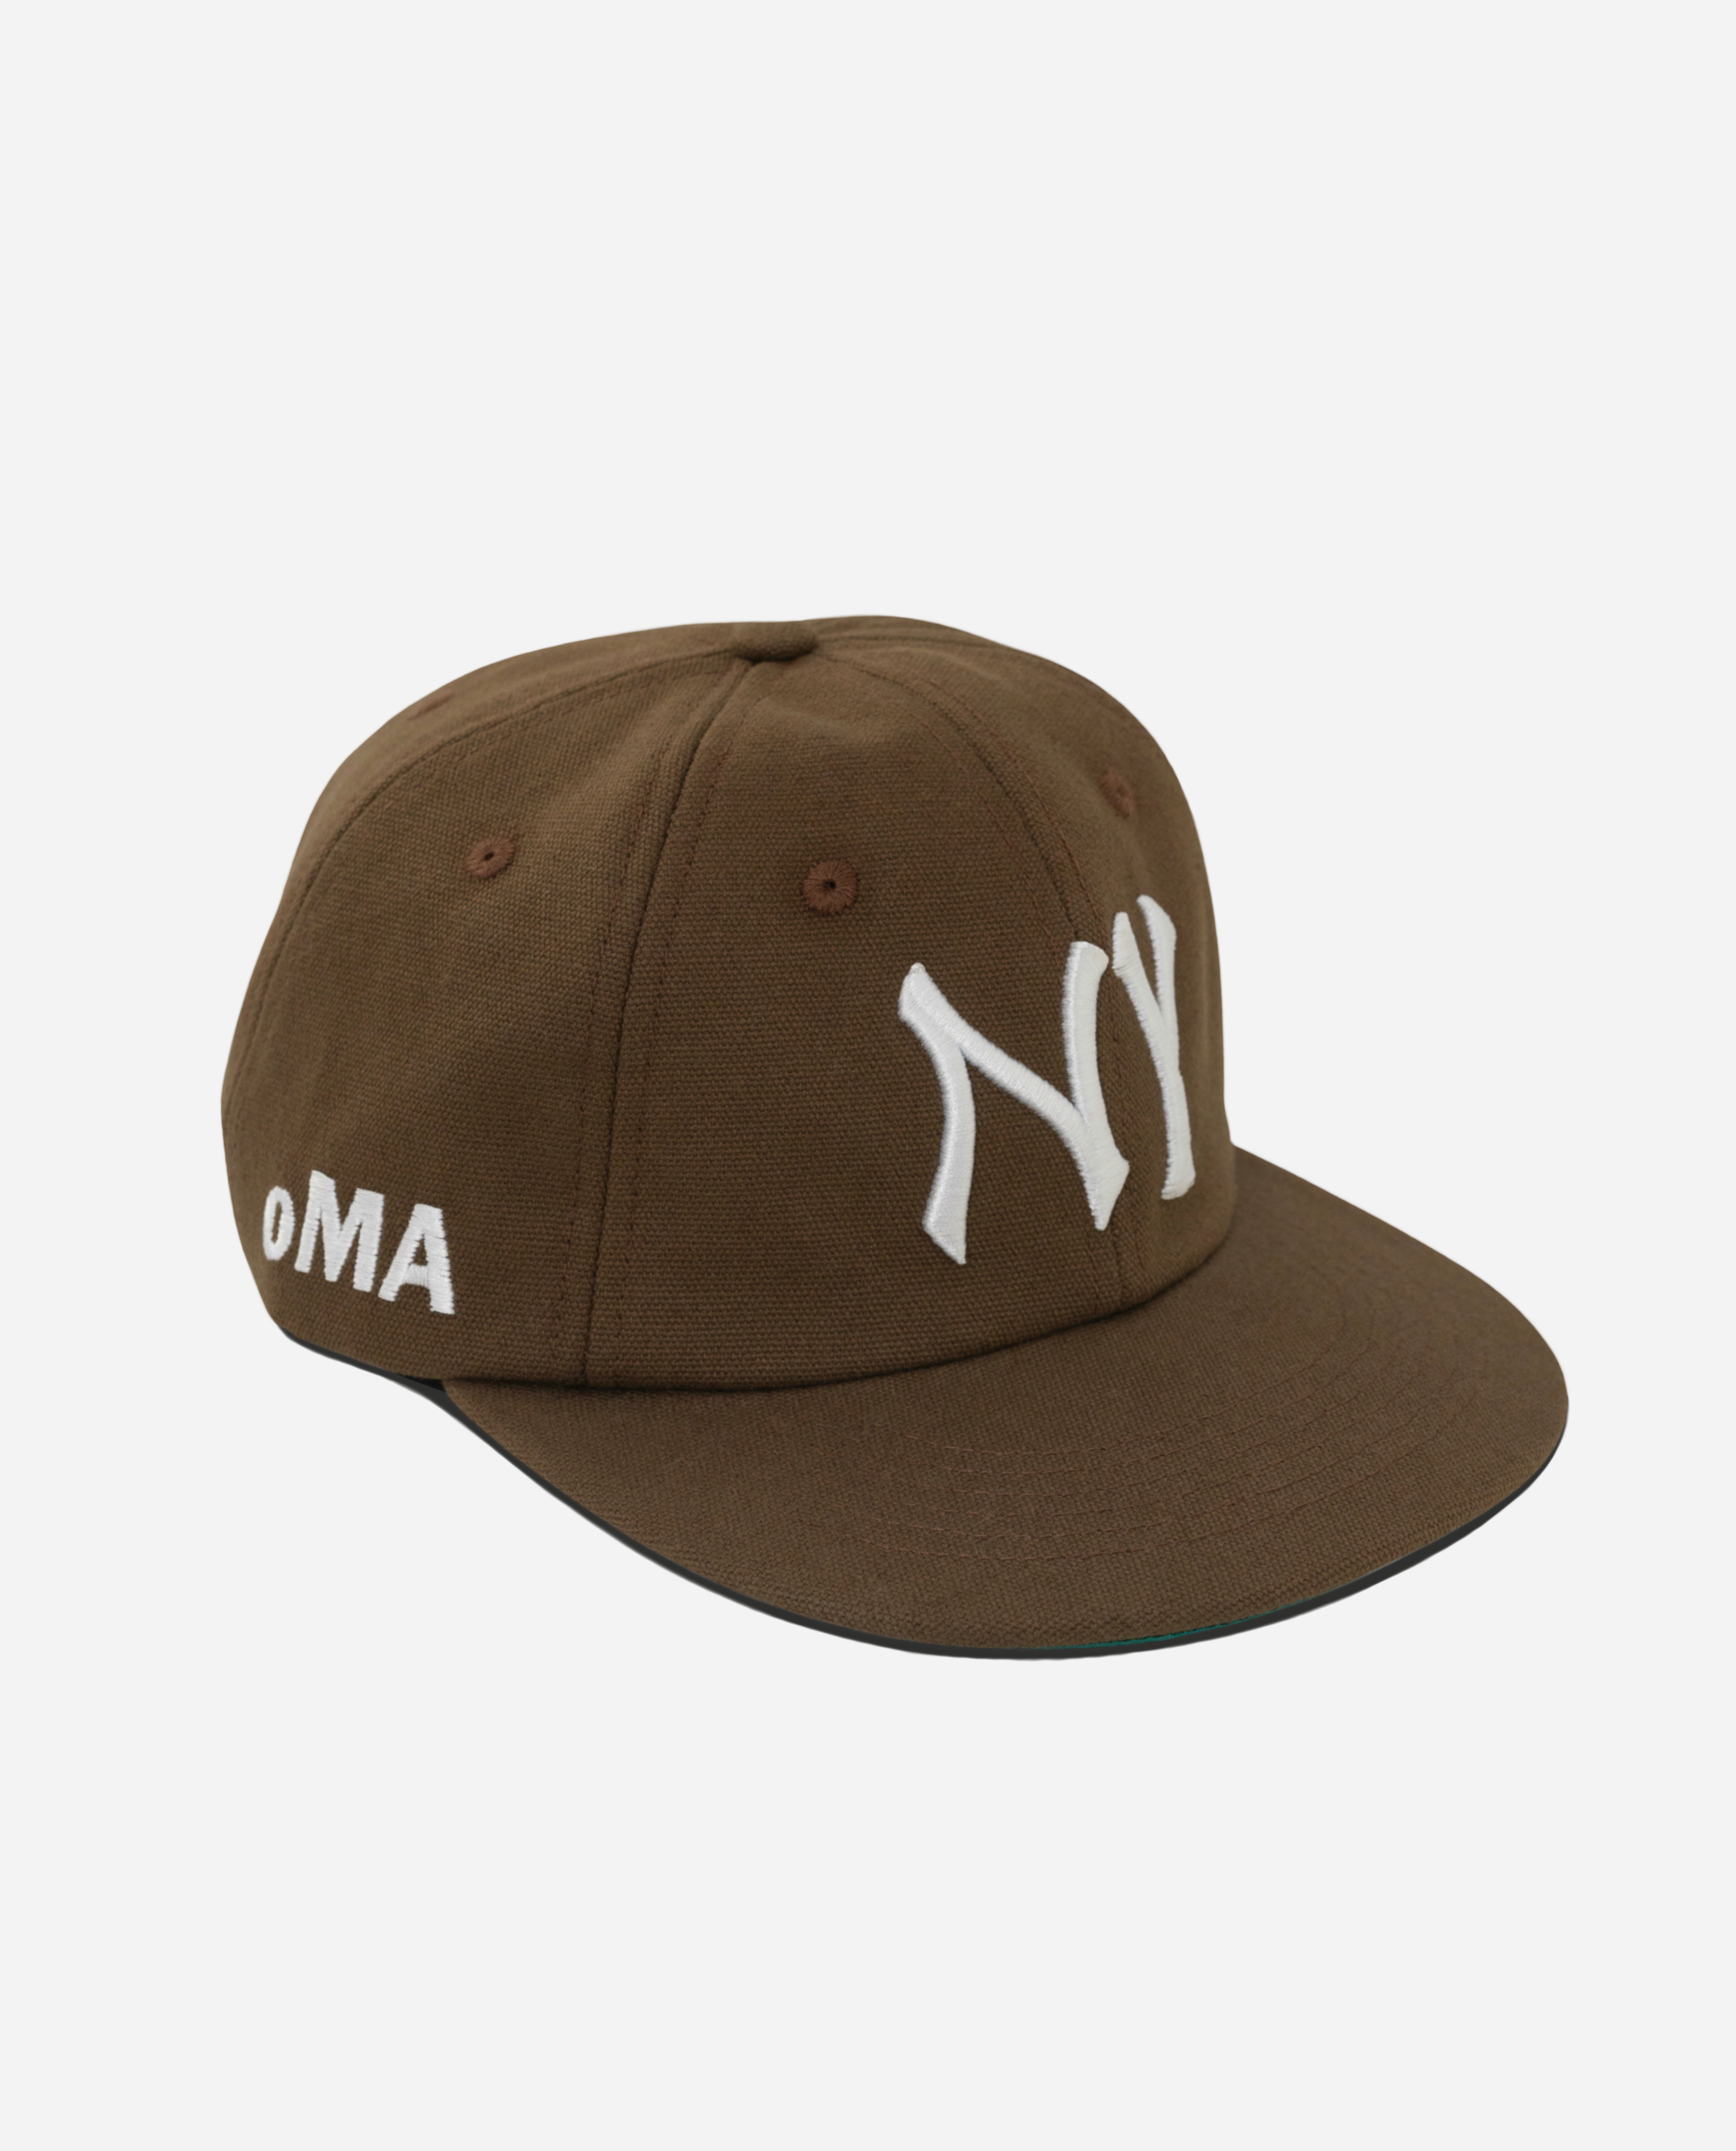 oMA NEW YORK HAT (BROWN)